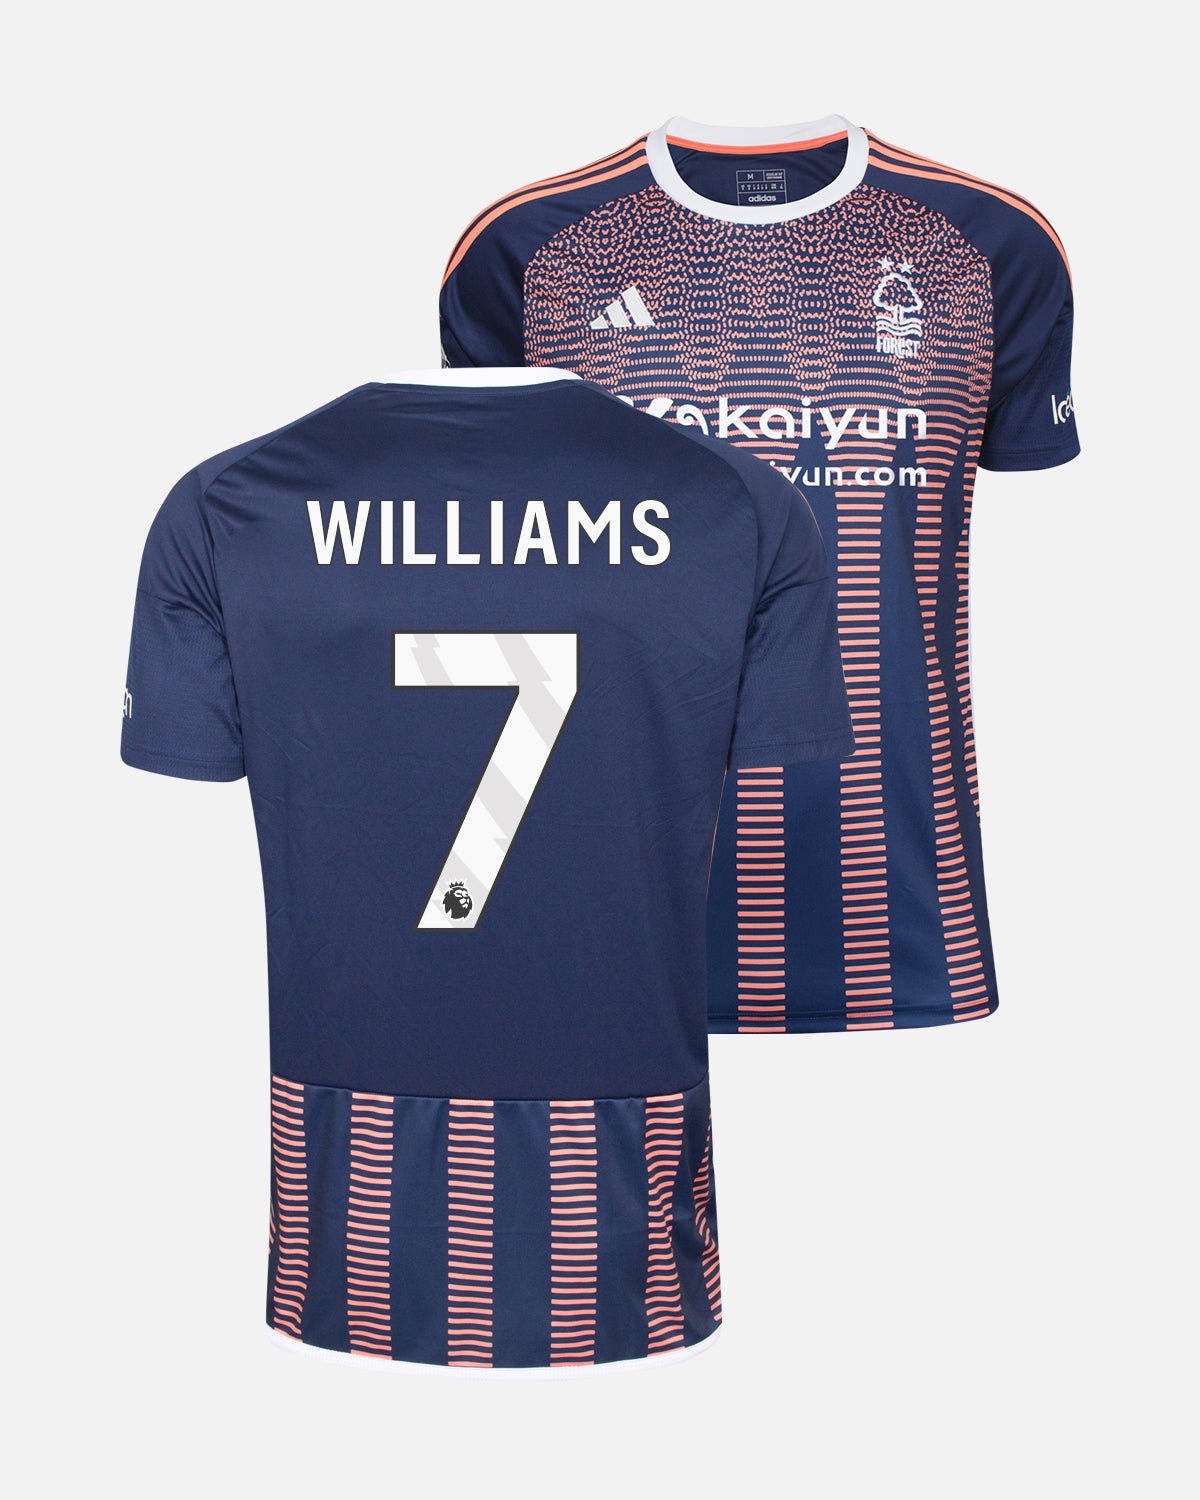 NFFC Third Shirt 23-24 - Williams 7 - Nottingham Forest FC